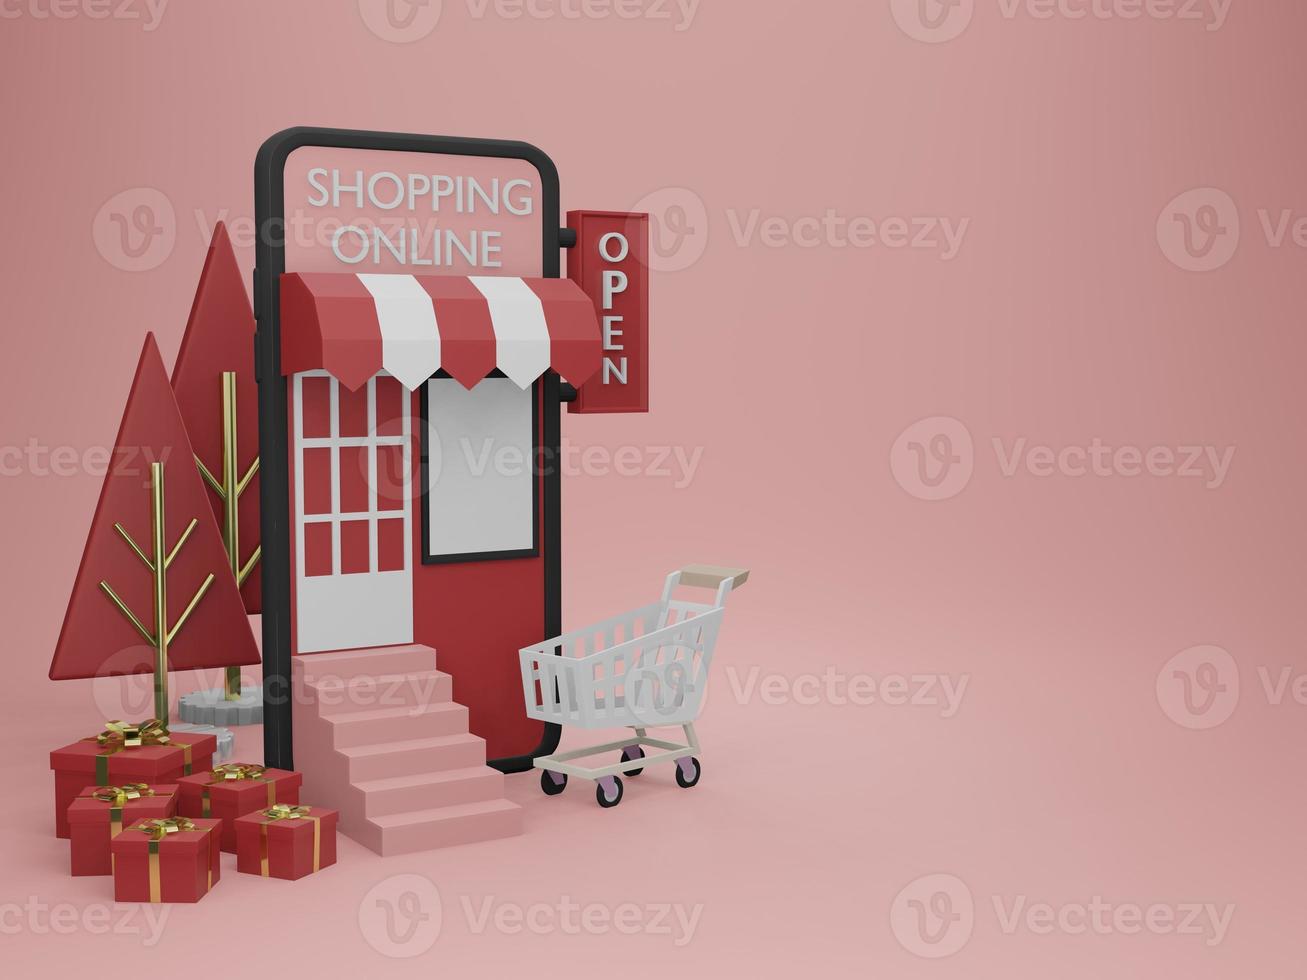 lieferung nach hause vom online-shopping in 3d-illustrationsrendering foto